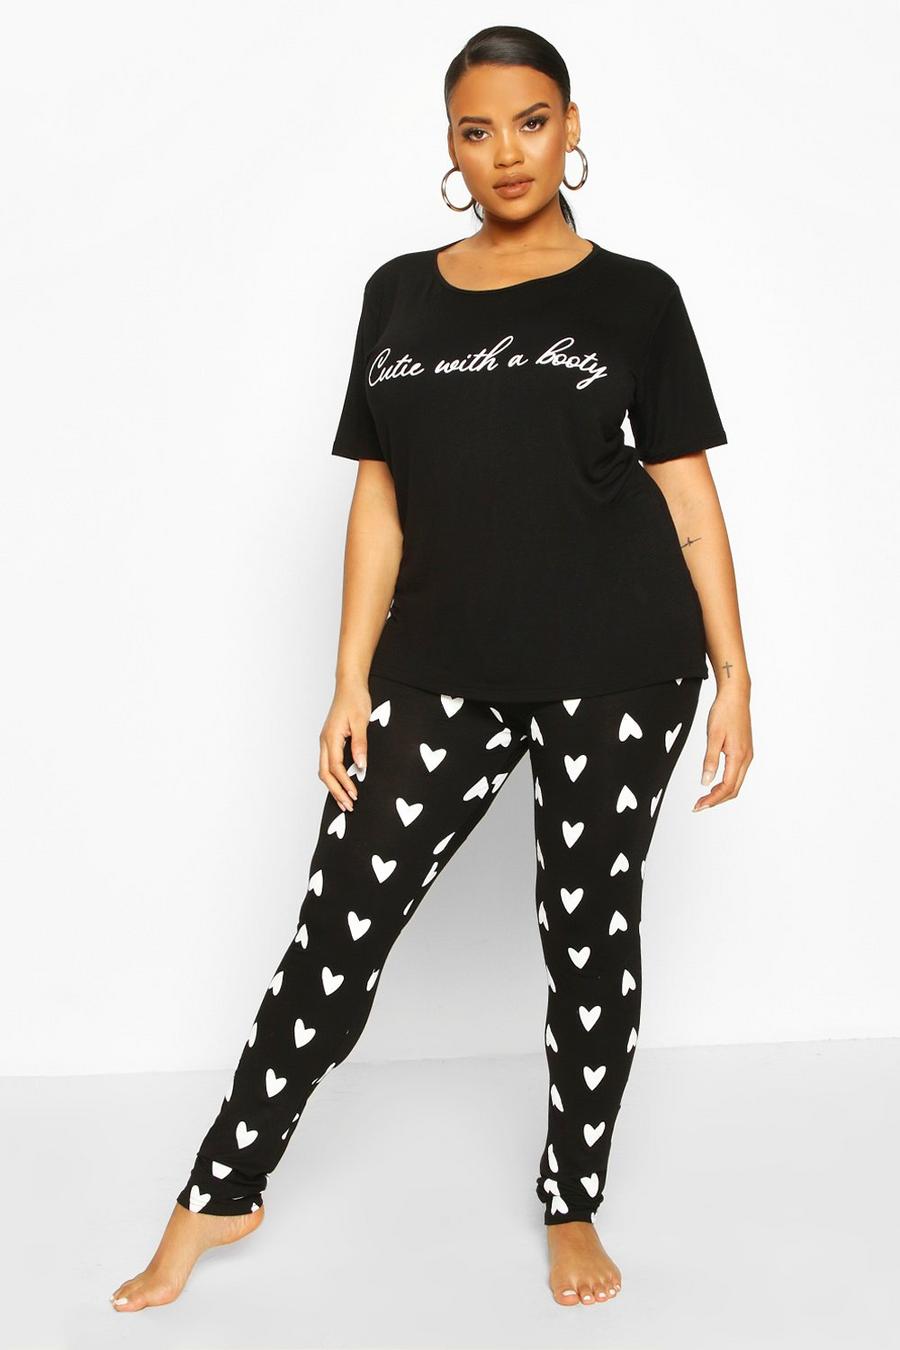 Black Plus 'Cutie With A Booty' Slogan Top & Heart Print Pants Pajama Set